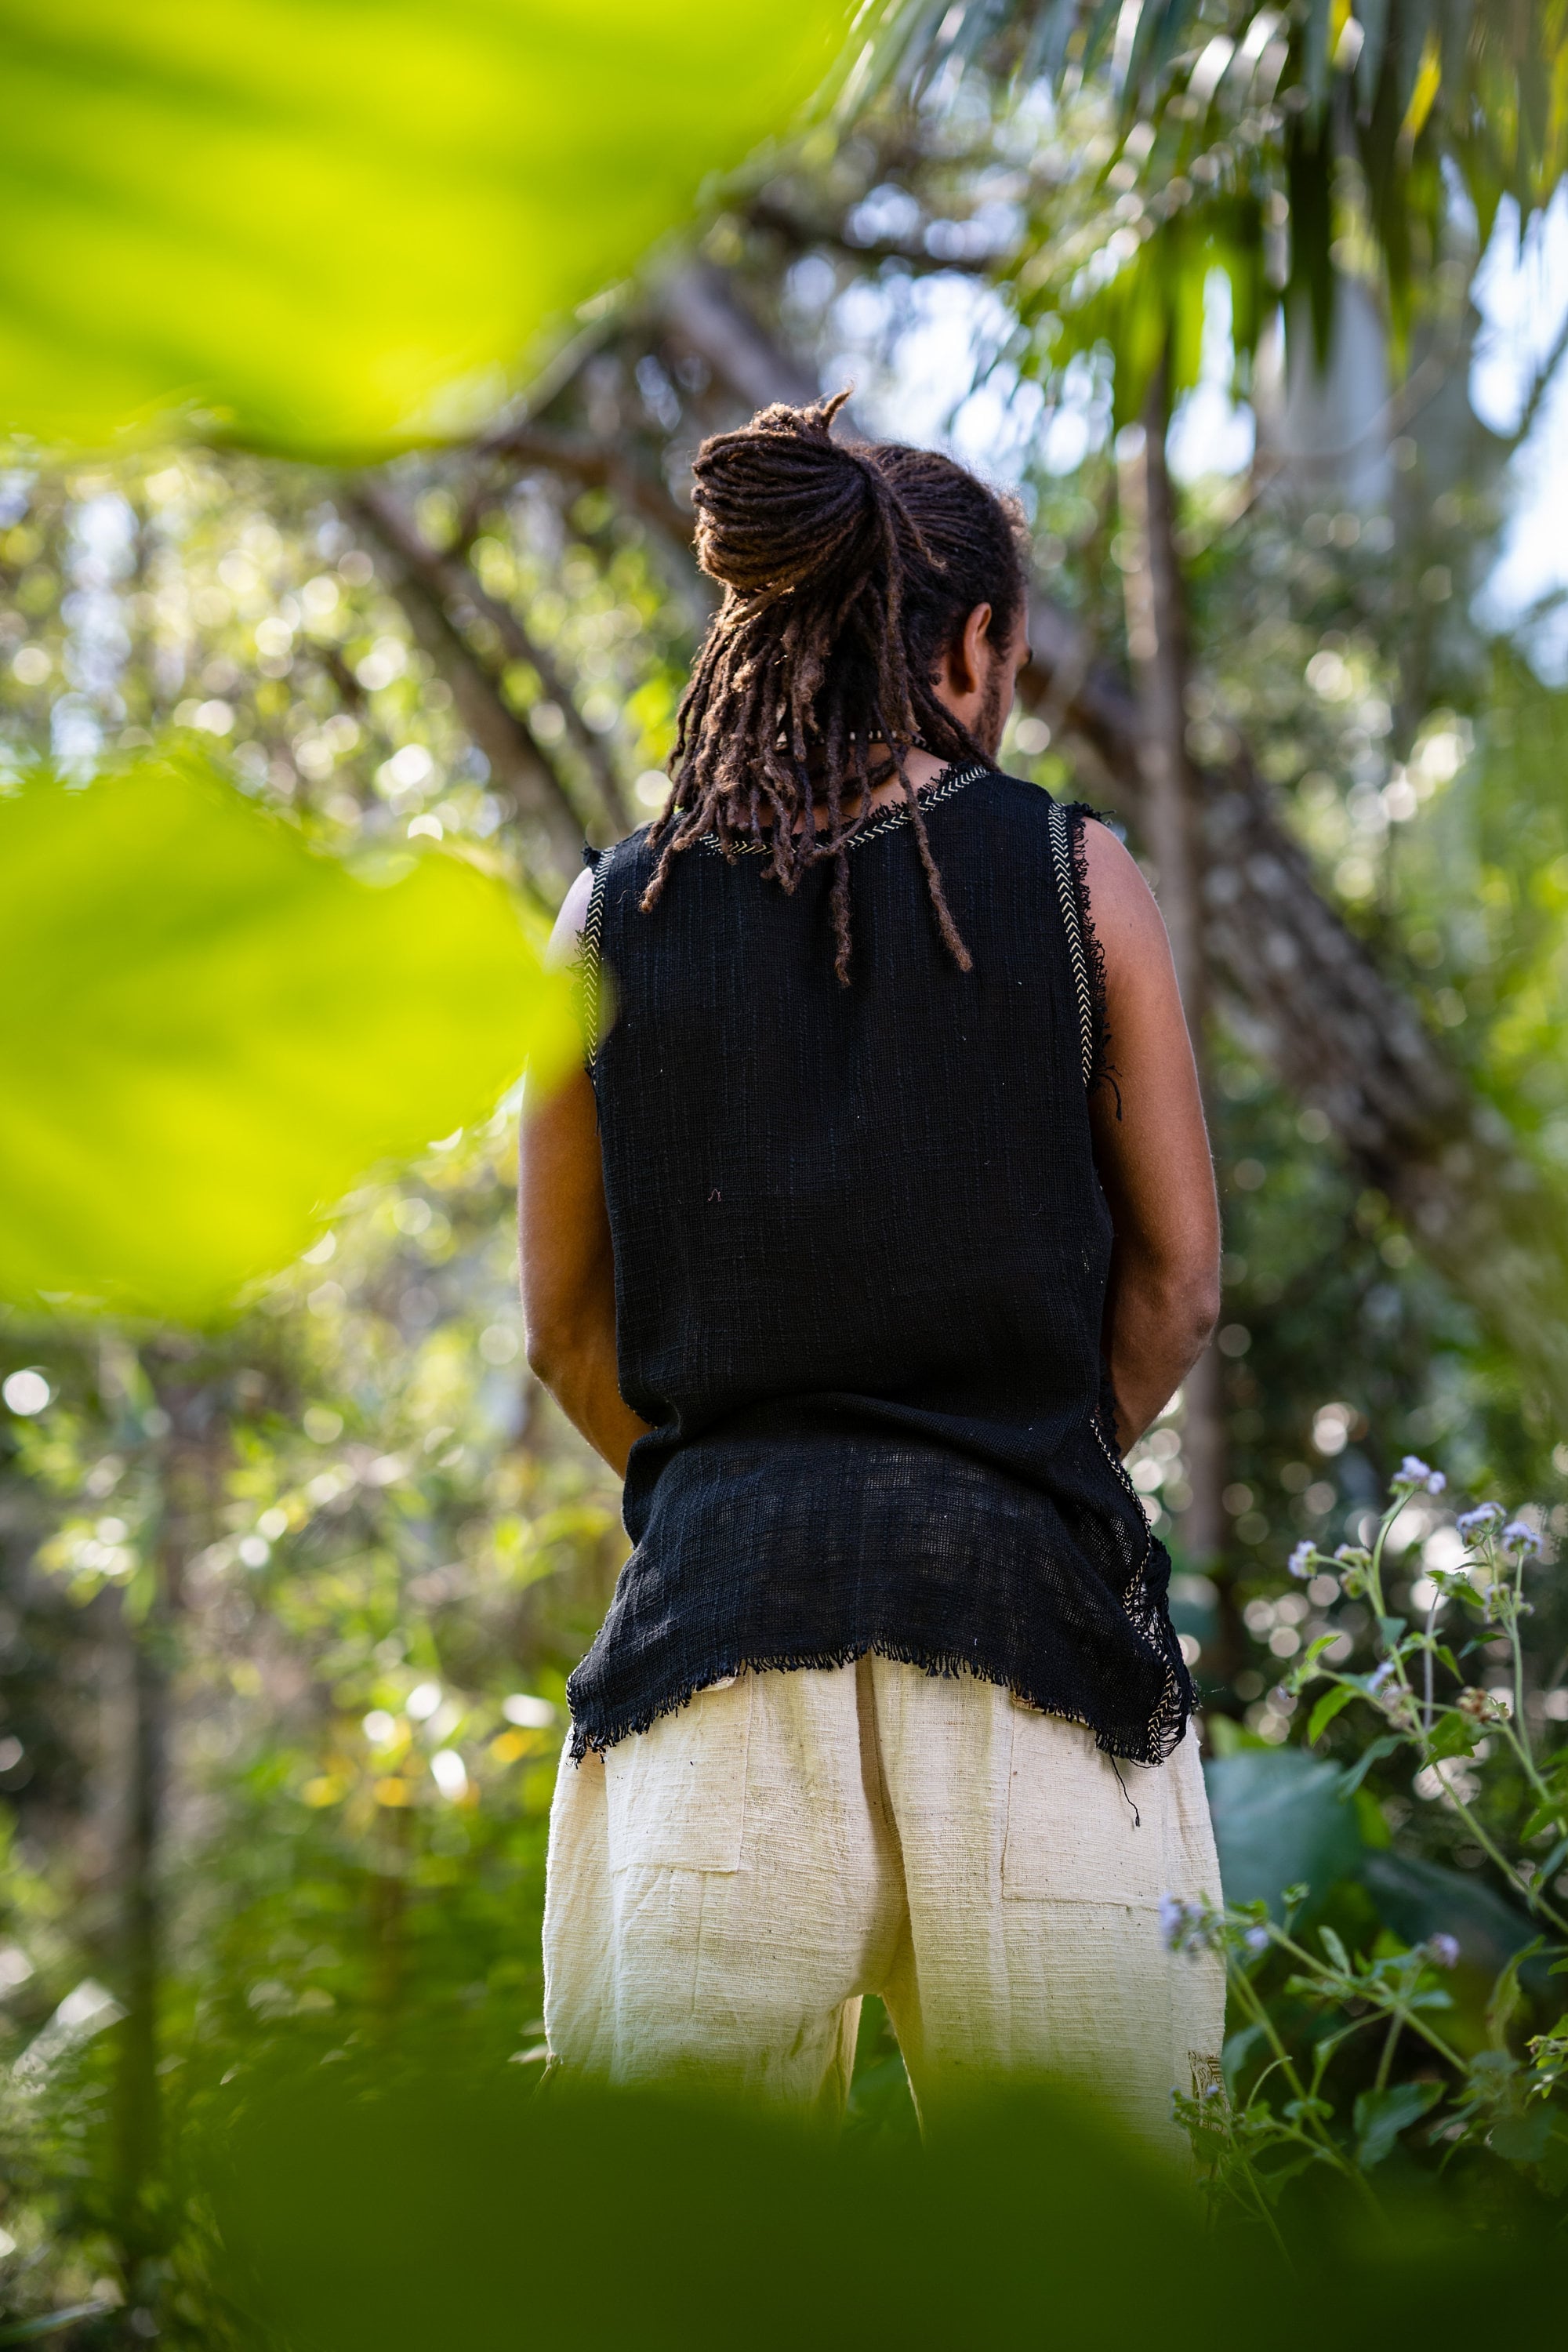 Mens Sleeveless Tank Top DHATU Cotton Shirt Slashed Open Sides Black Semi See Through Breathable Tribal Gypsy Alternative Festival AJJAYA